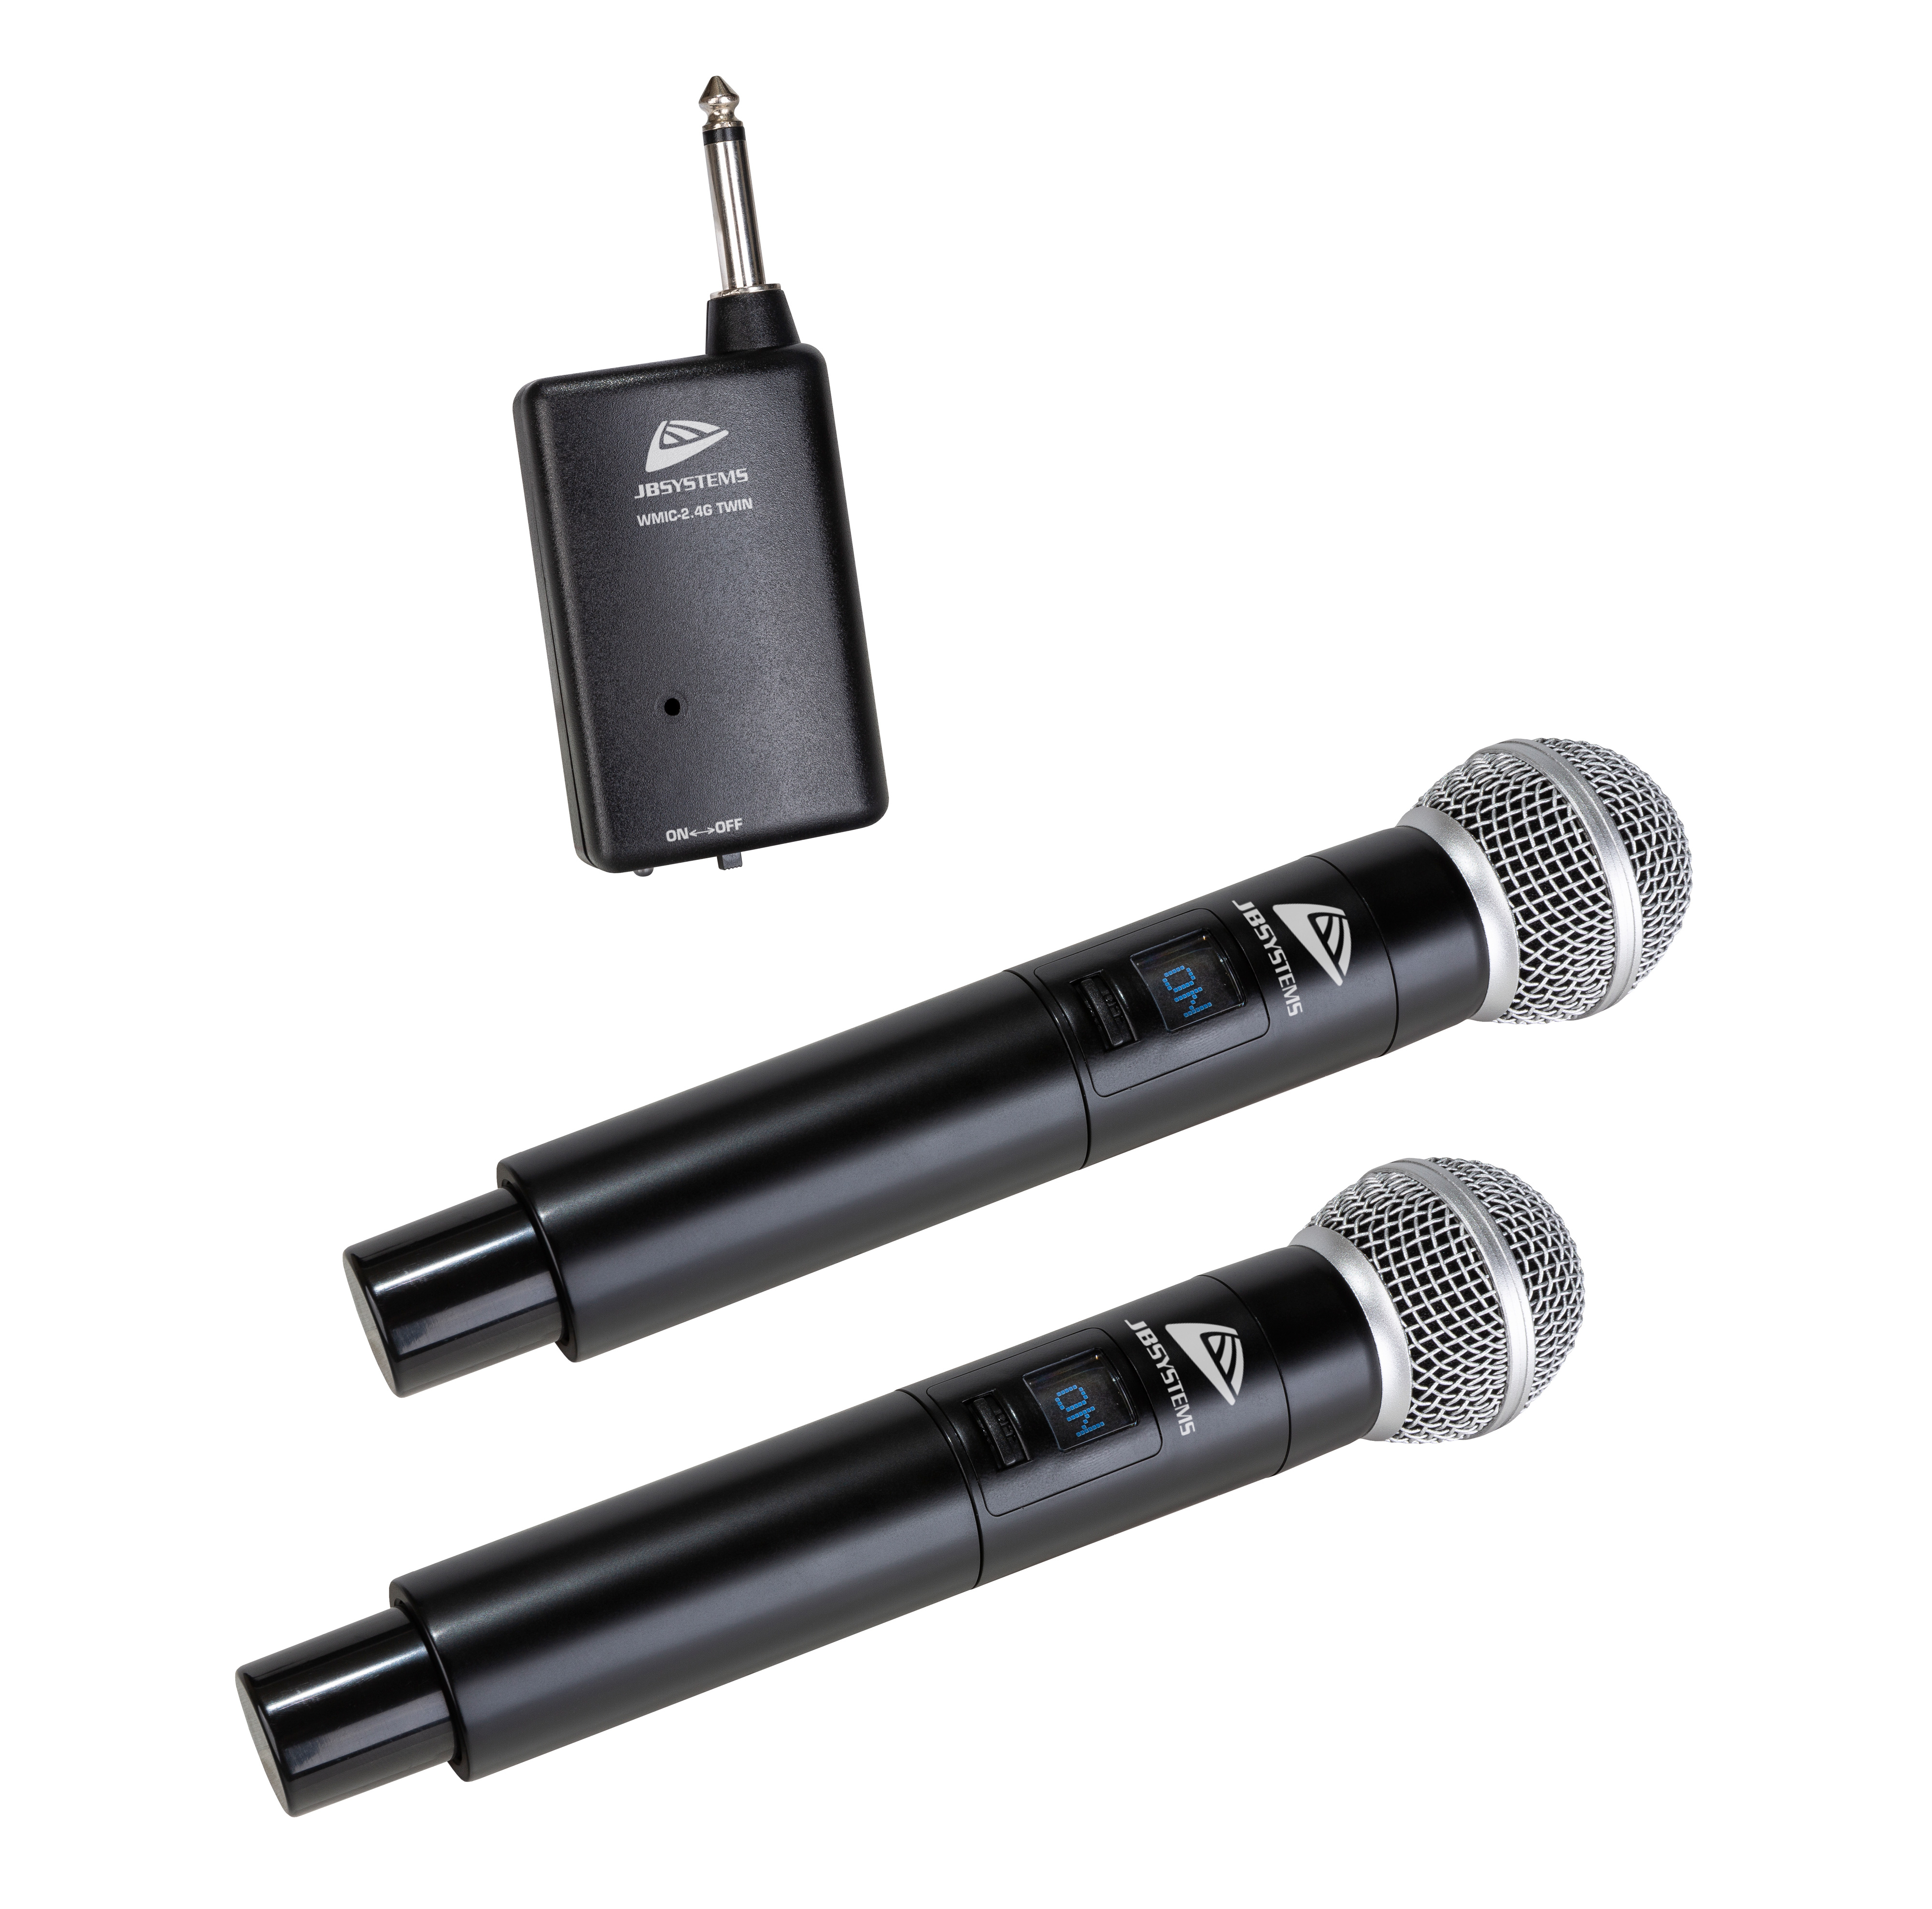 Eenvoudig, plug en play, draadloos 2,4GHz dubbel handmicrofoonsysteem: 2 microfoons en 1 ontvanger